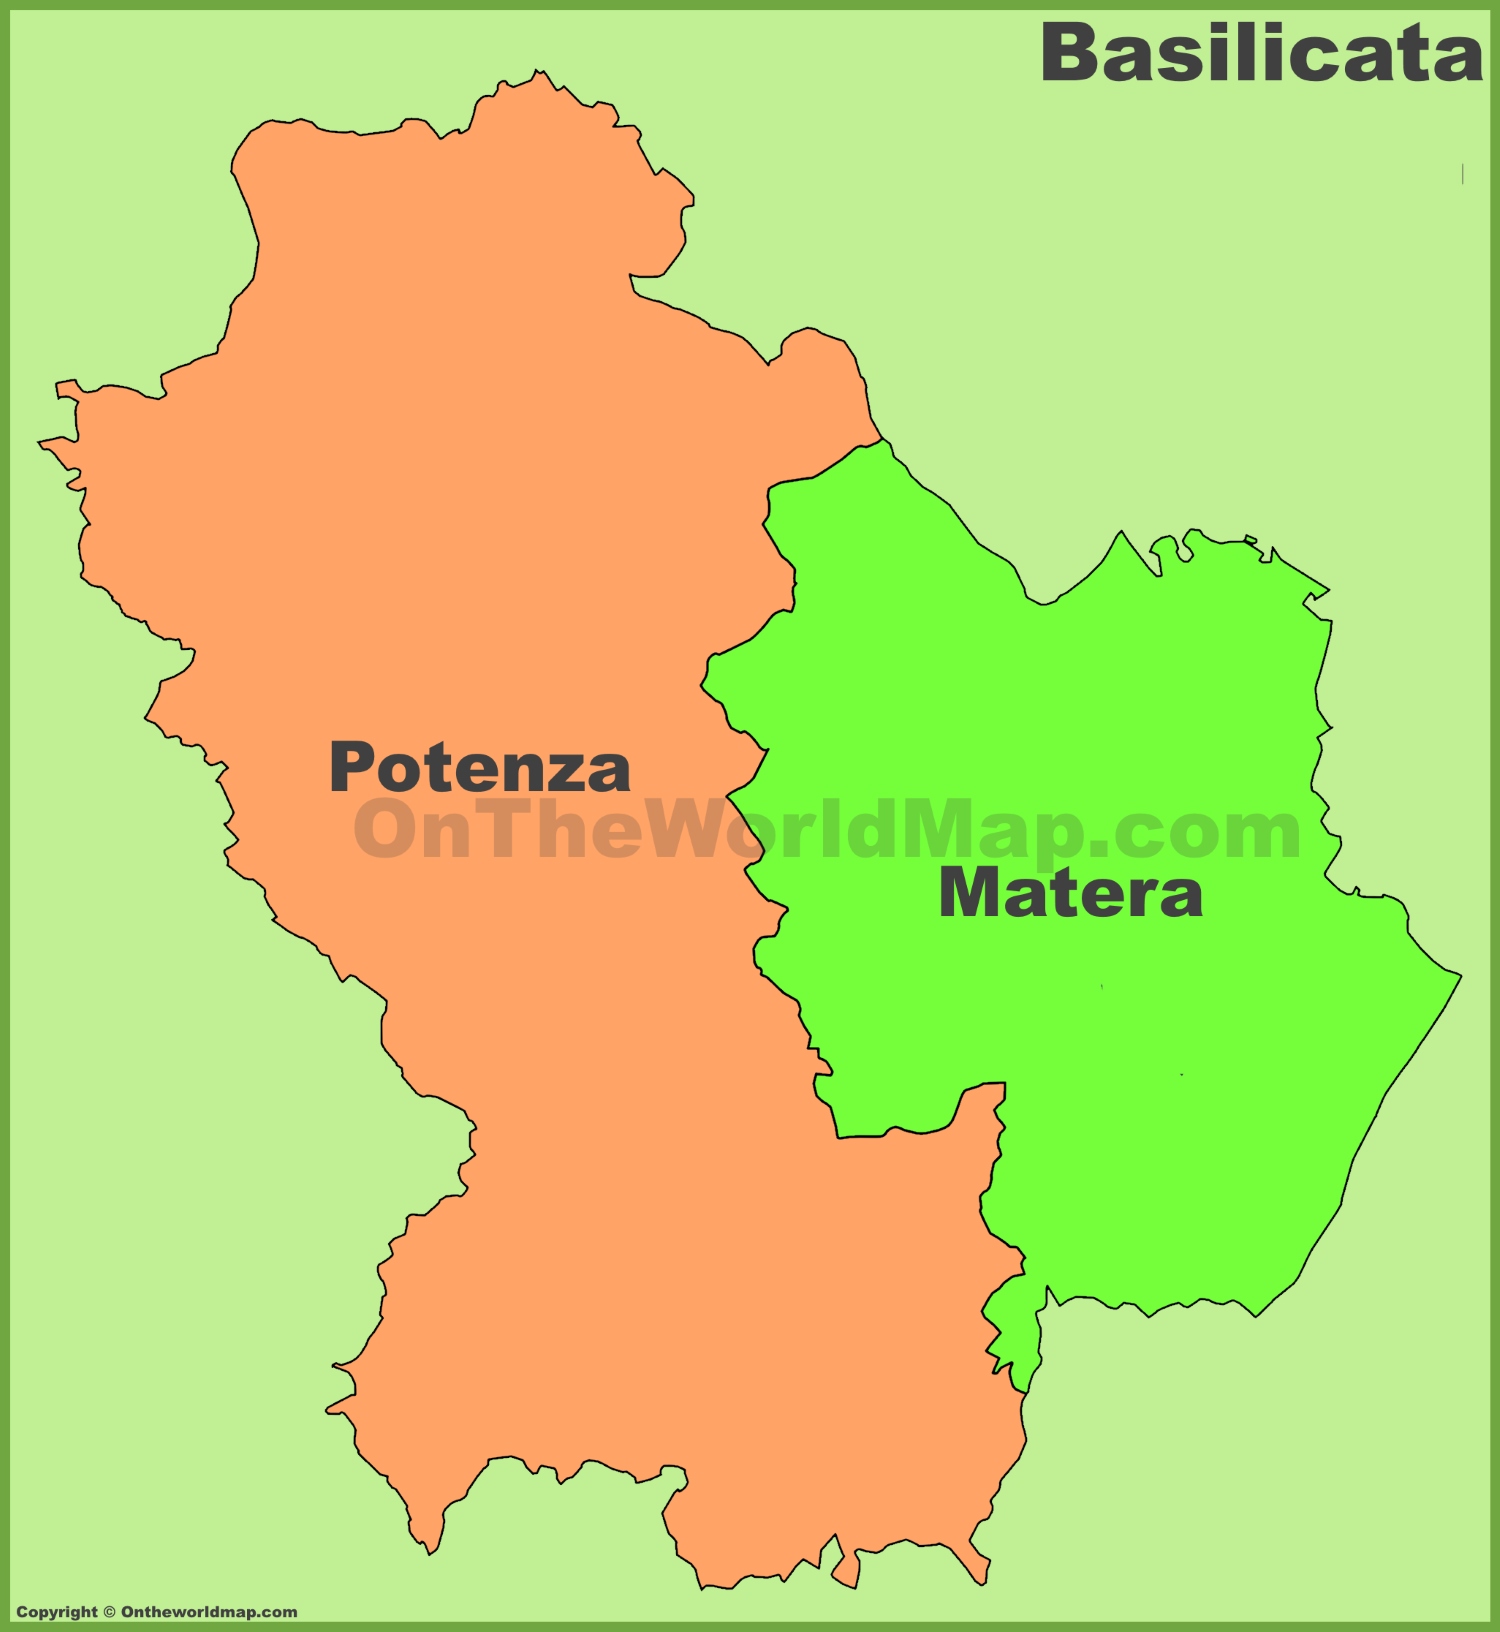 Basilicata region